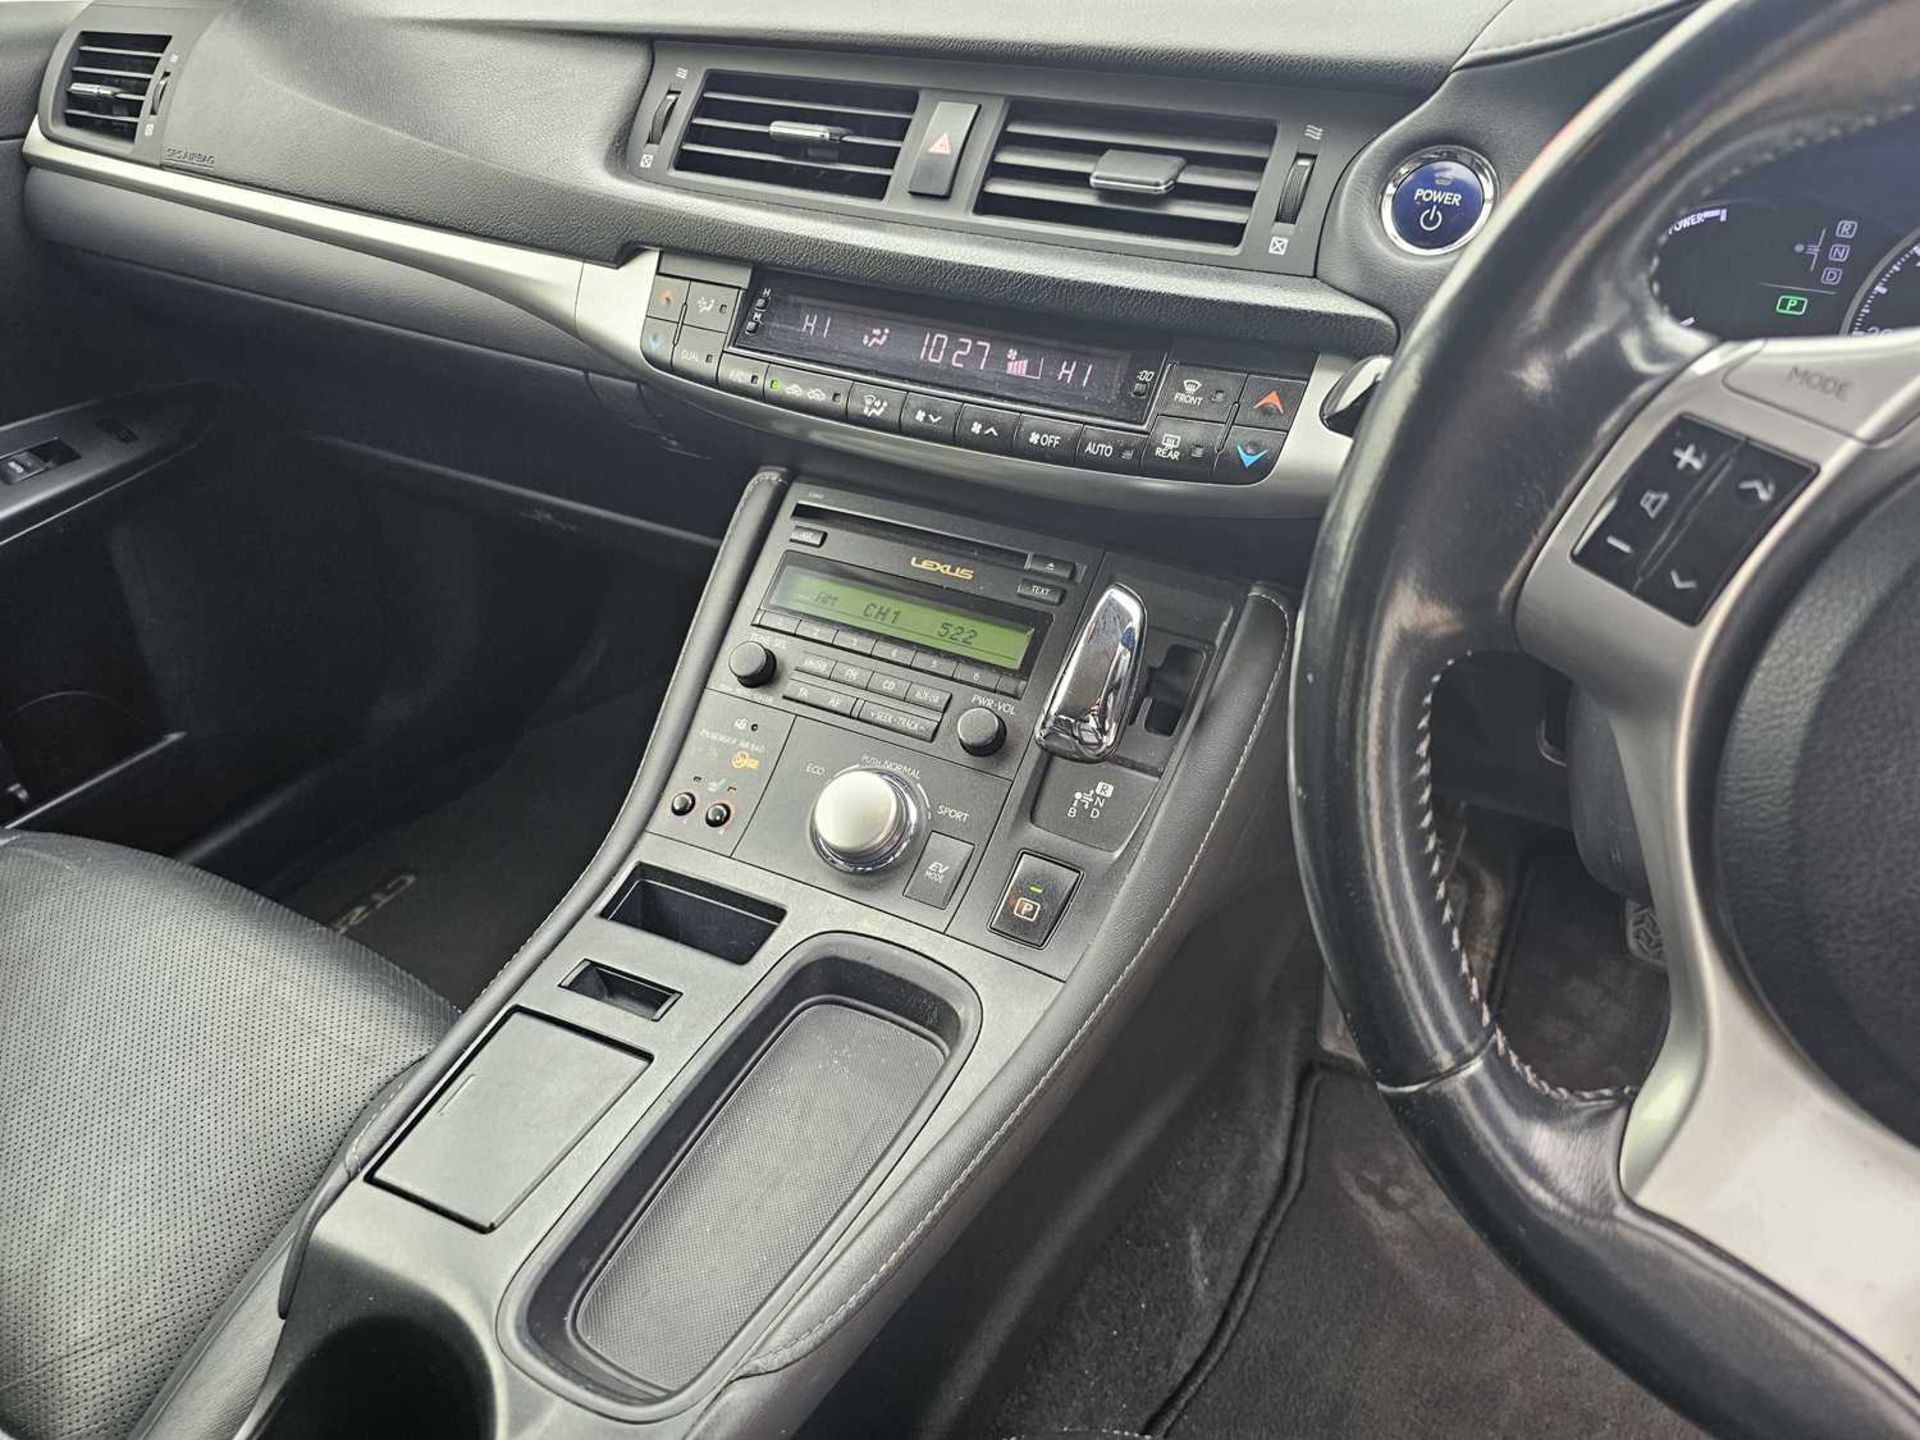 2011 Lexus CT200H Se-L Cvt Hybrid, Auto, Full Leather, Heated Seats, Bluetooth (NO VAT)(Reg. Docs. A - Image 22 of 26